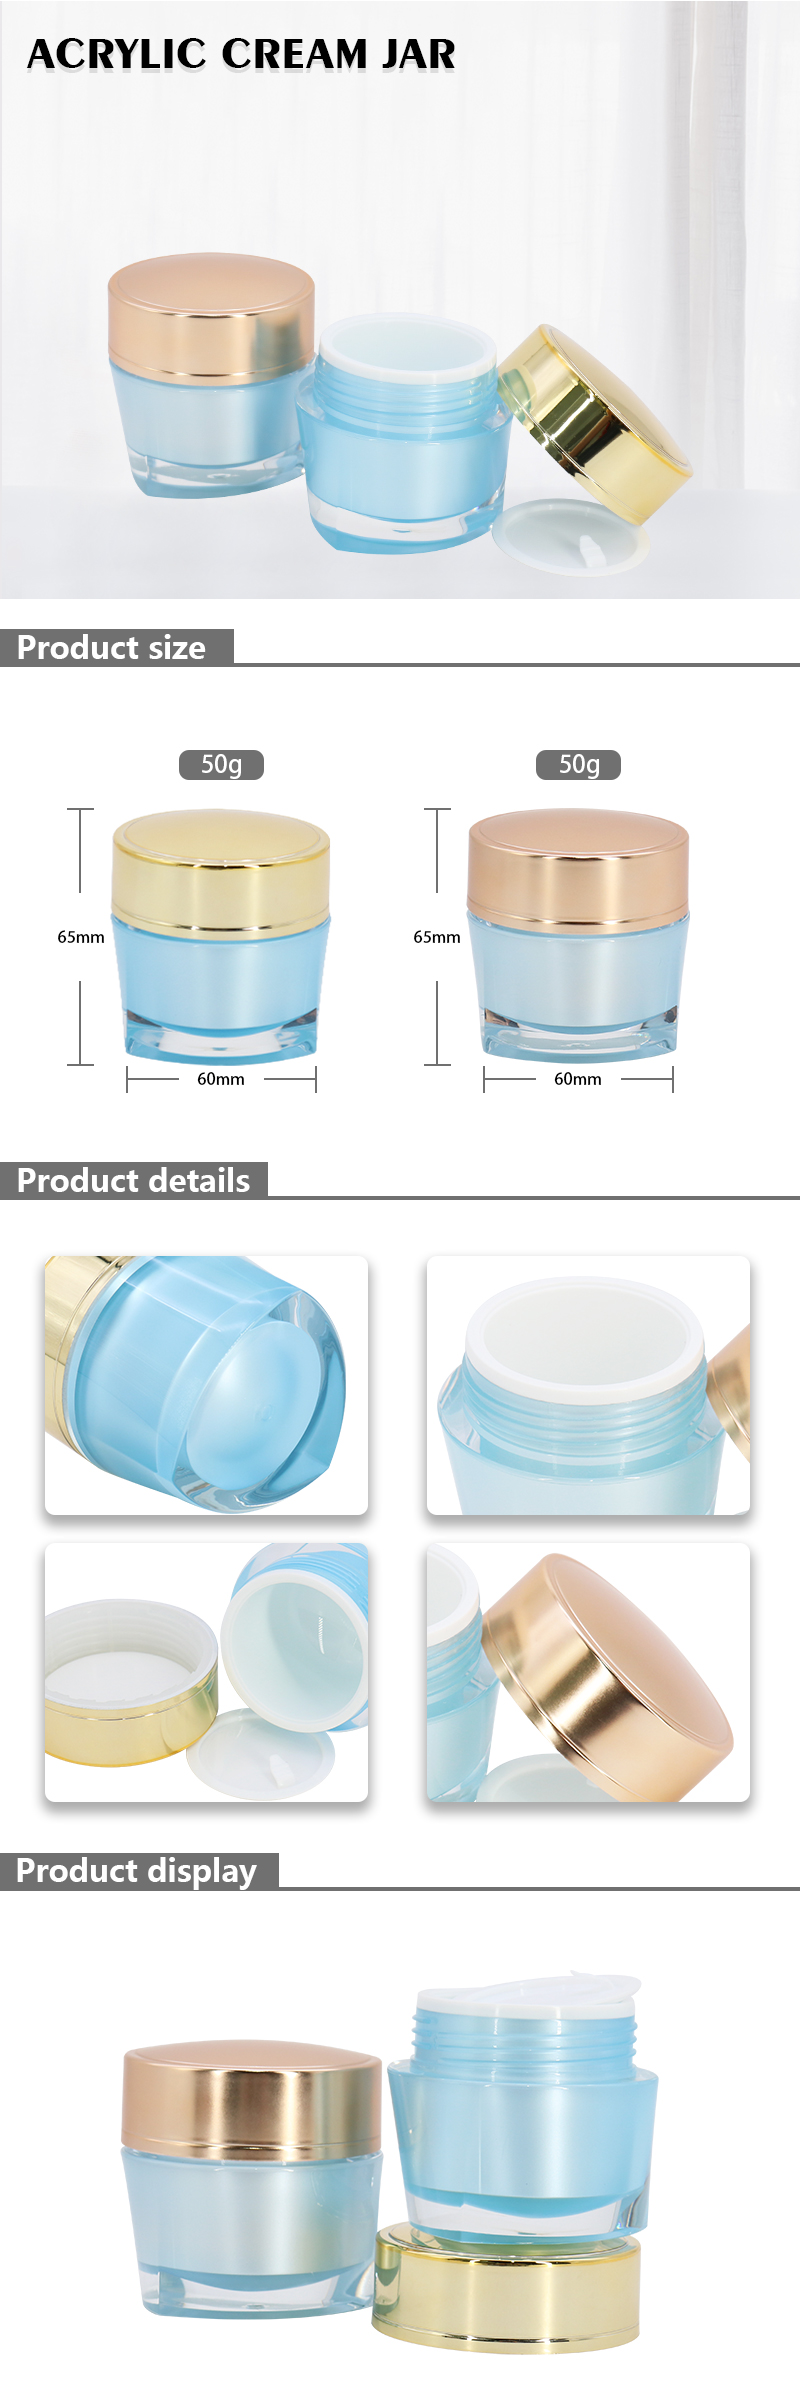 Ocean Blue Acrylic Cream Jar